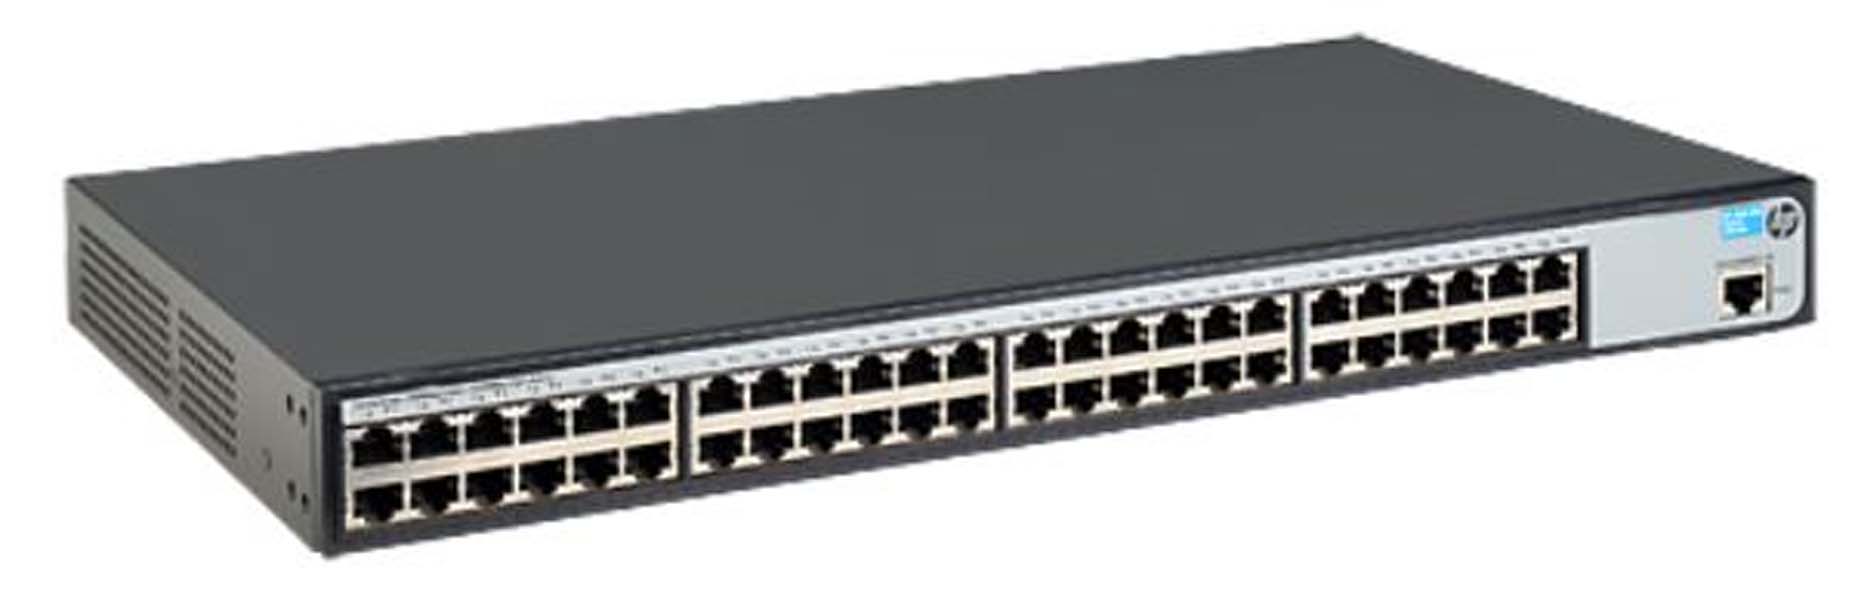 Harga Hp JG913A V1620-24G Gigabit Web Managed Switch 22 x 10/100/1000 ports